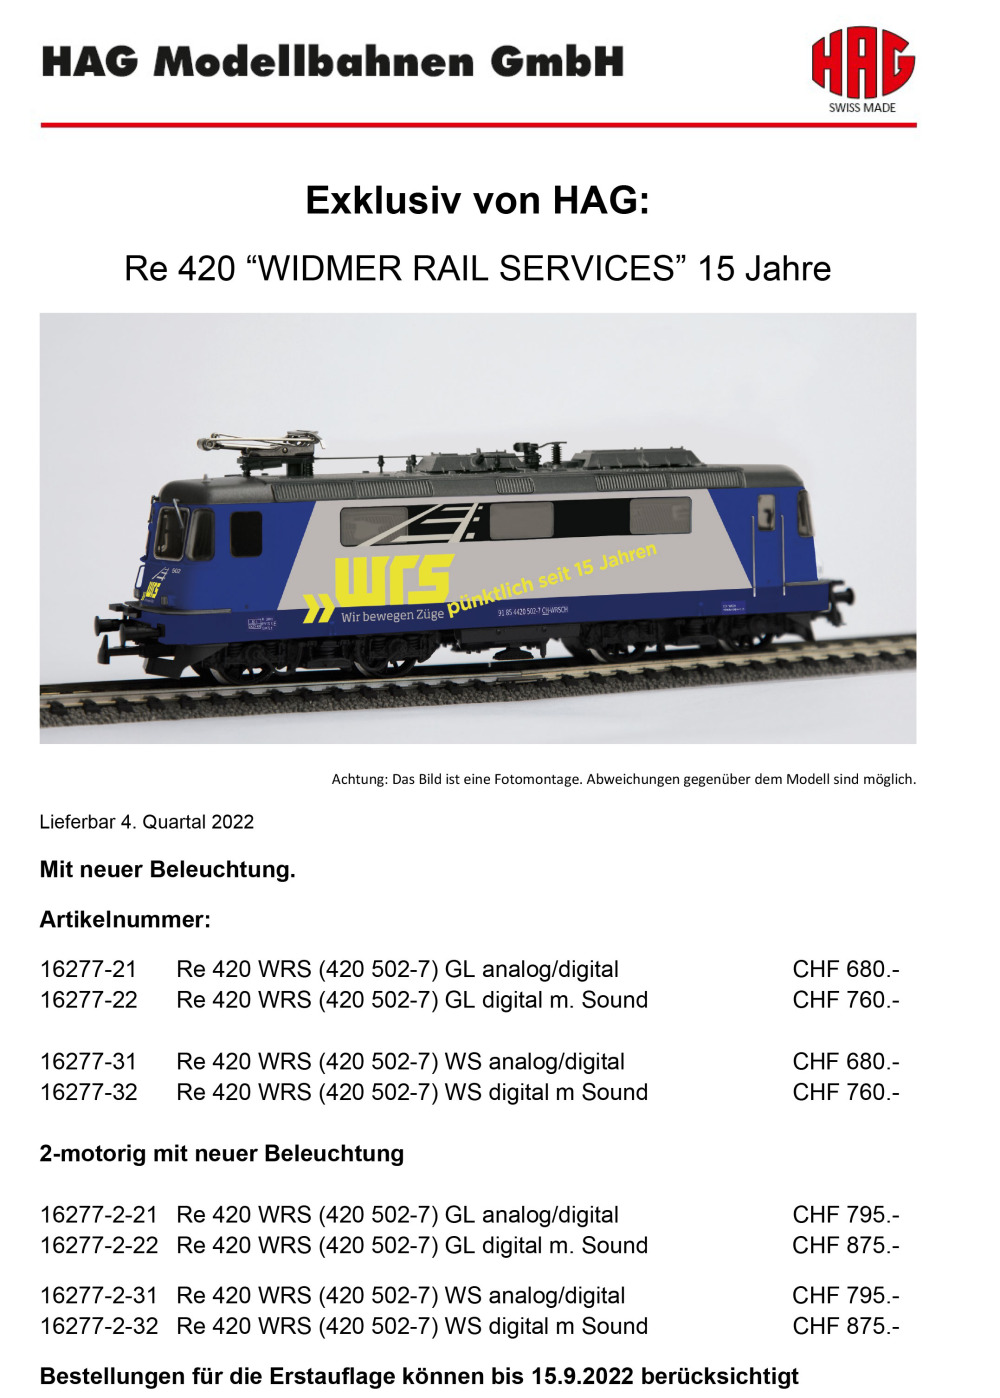 HAG - Re 420 "Widmer Rail Services - 15 years"